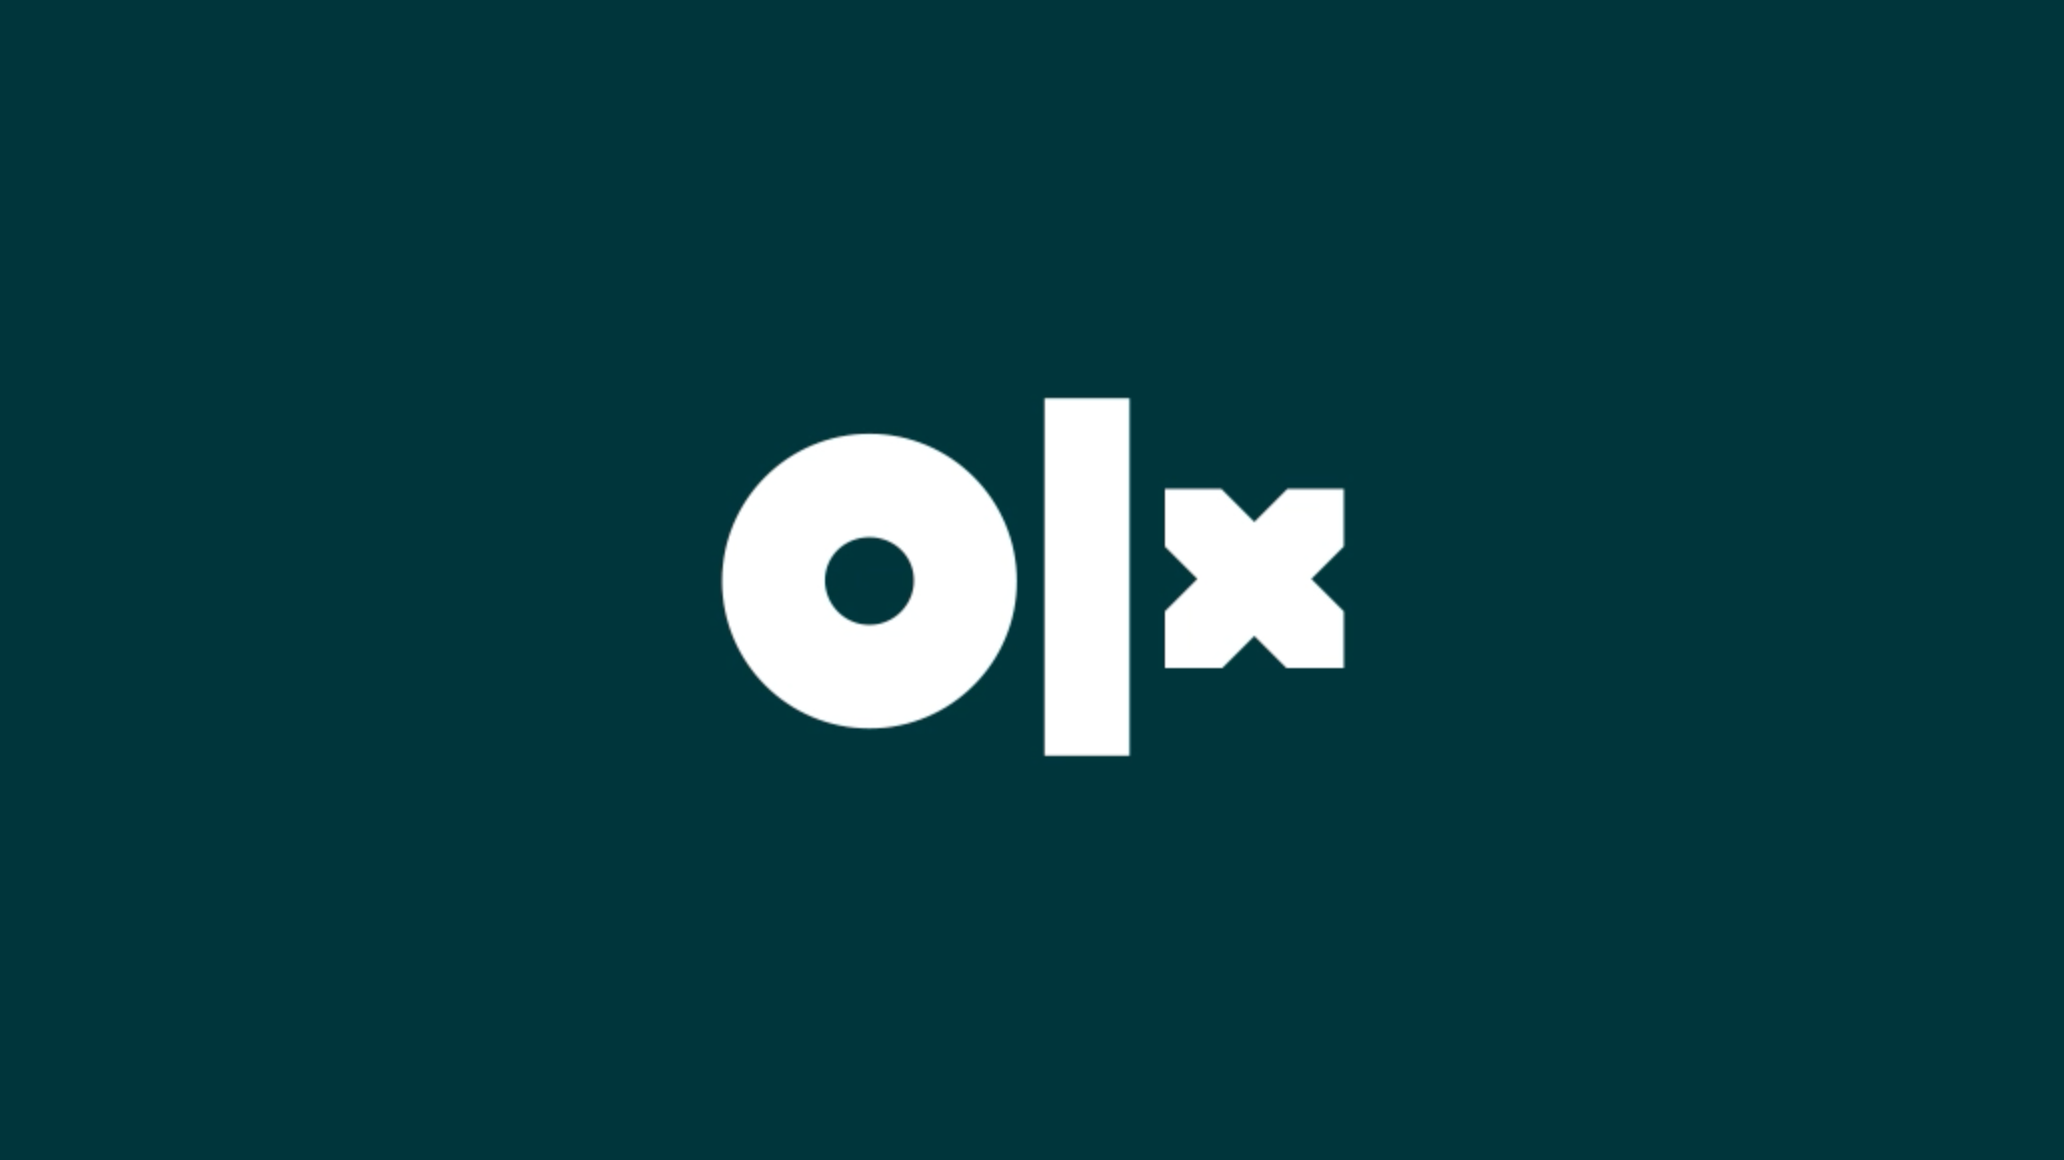 Oox freestyle 1